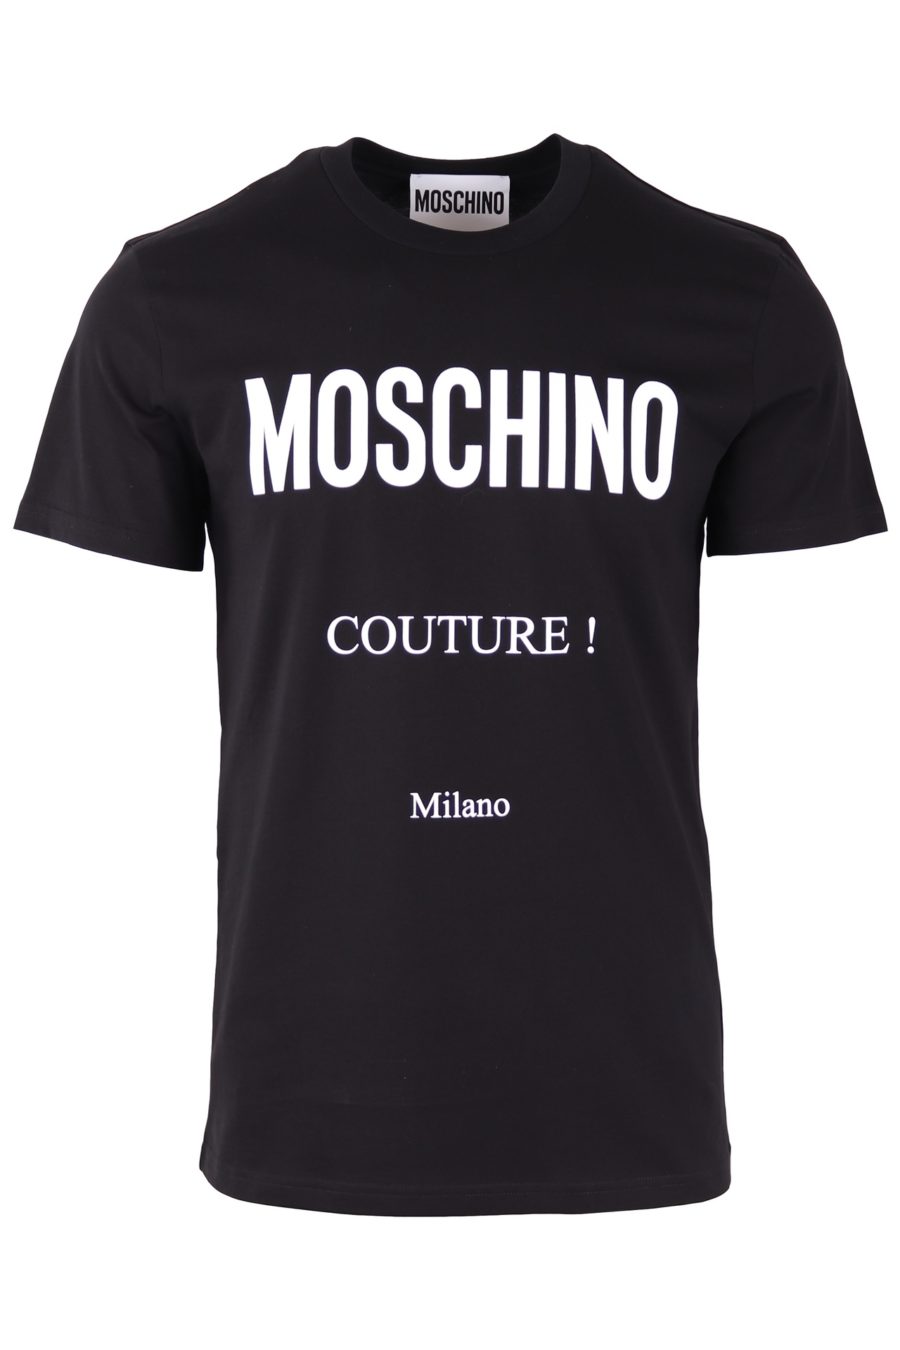 Camiseta Moschino Couture Milano negra con logo blanco - de6a9afcb66a3de959dc7514b18fe37bbf5e4108